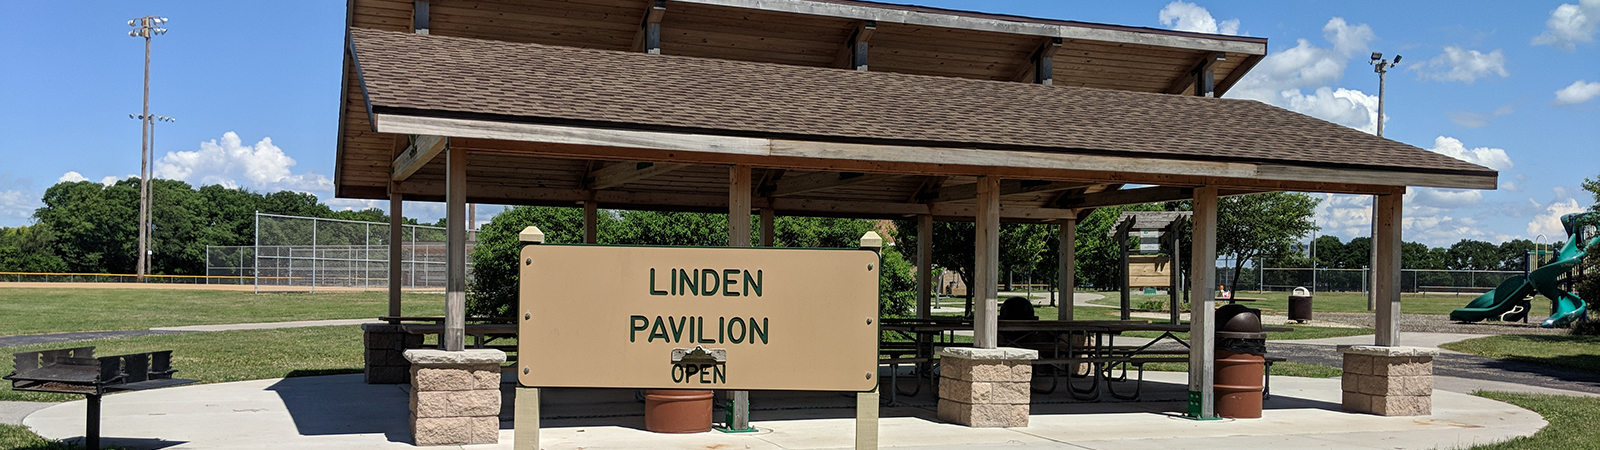 Linden Pavilion